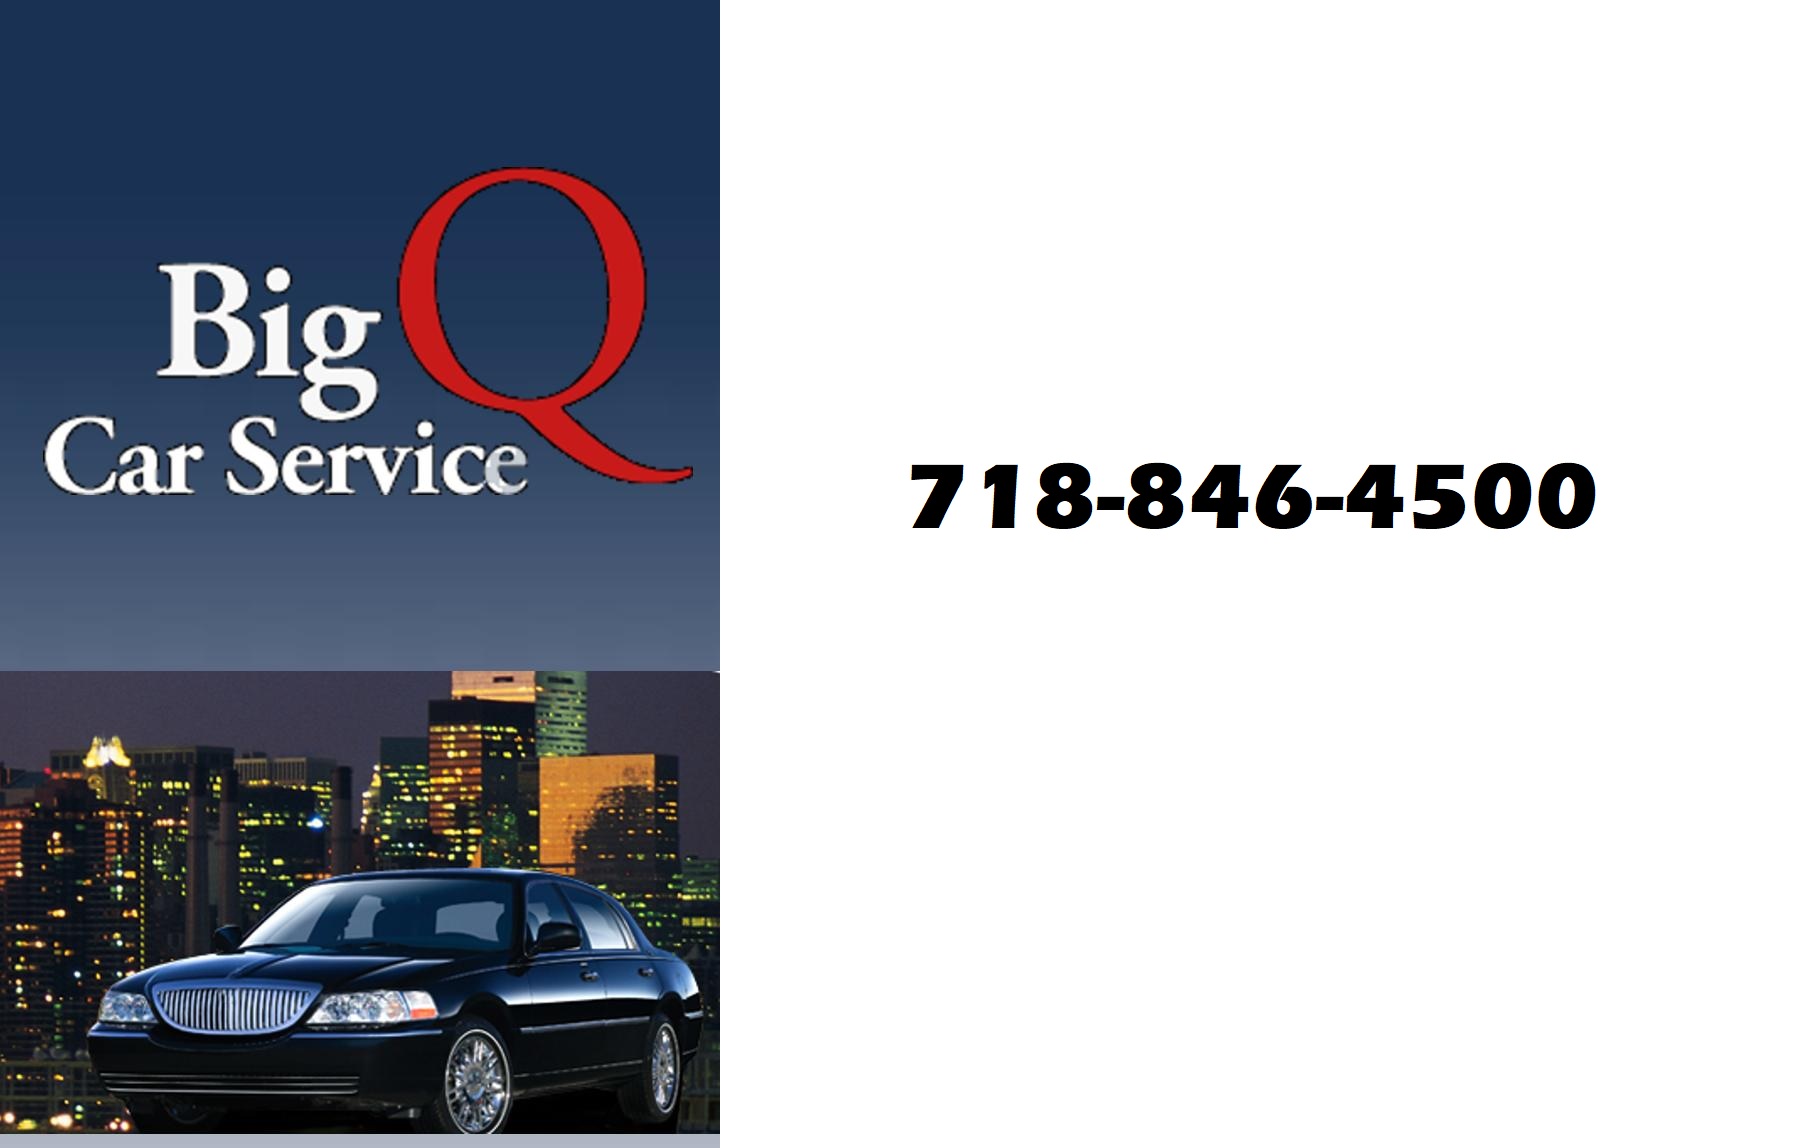 Big-Q-Car-Service-Phone-Number